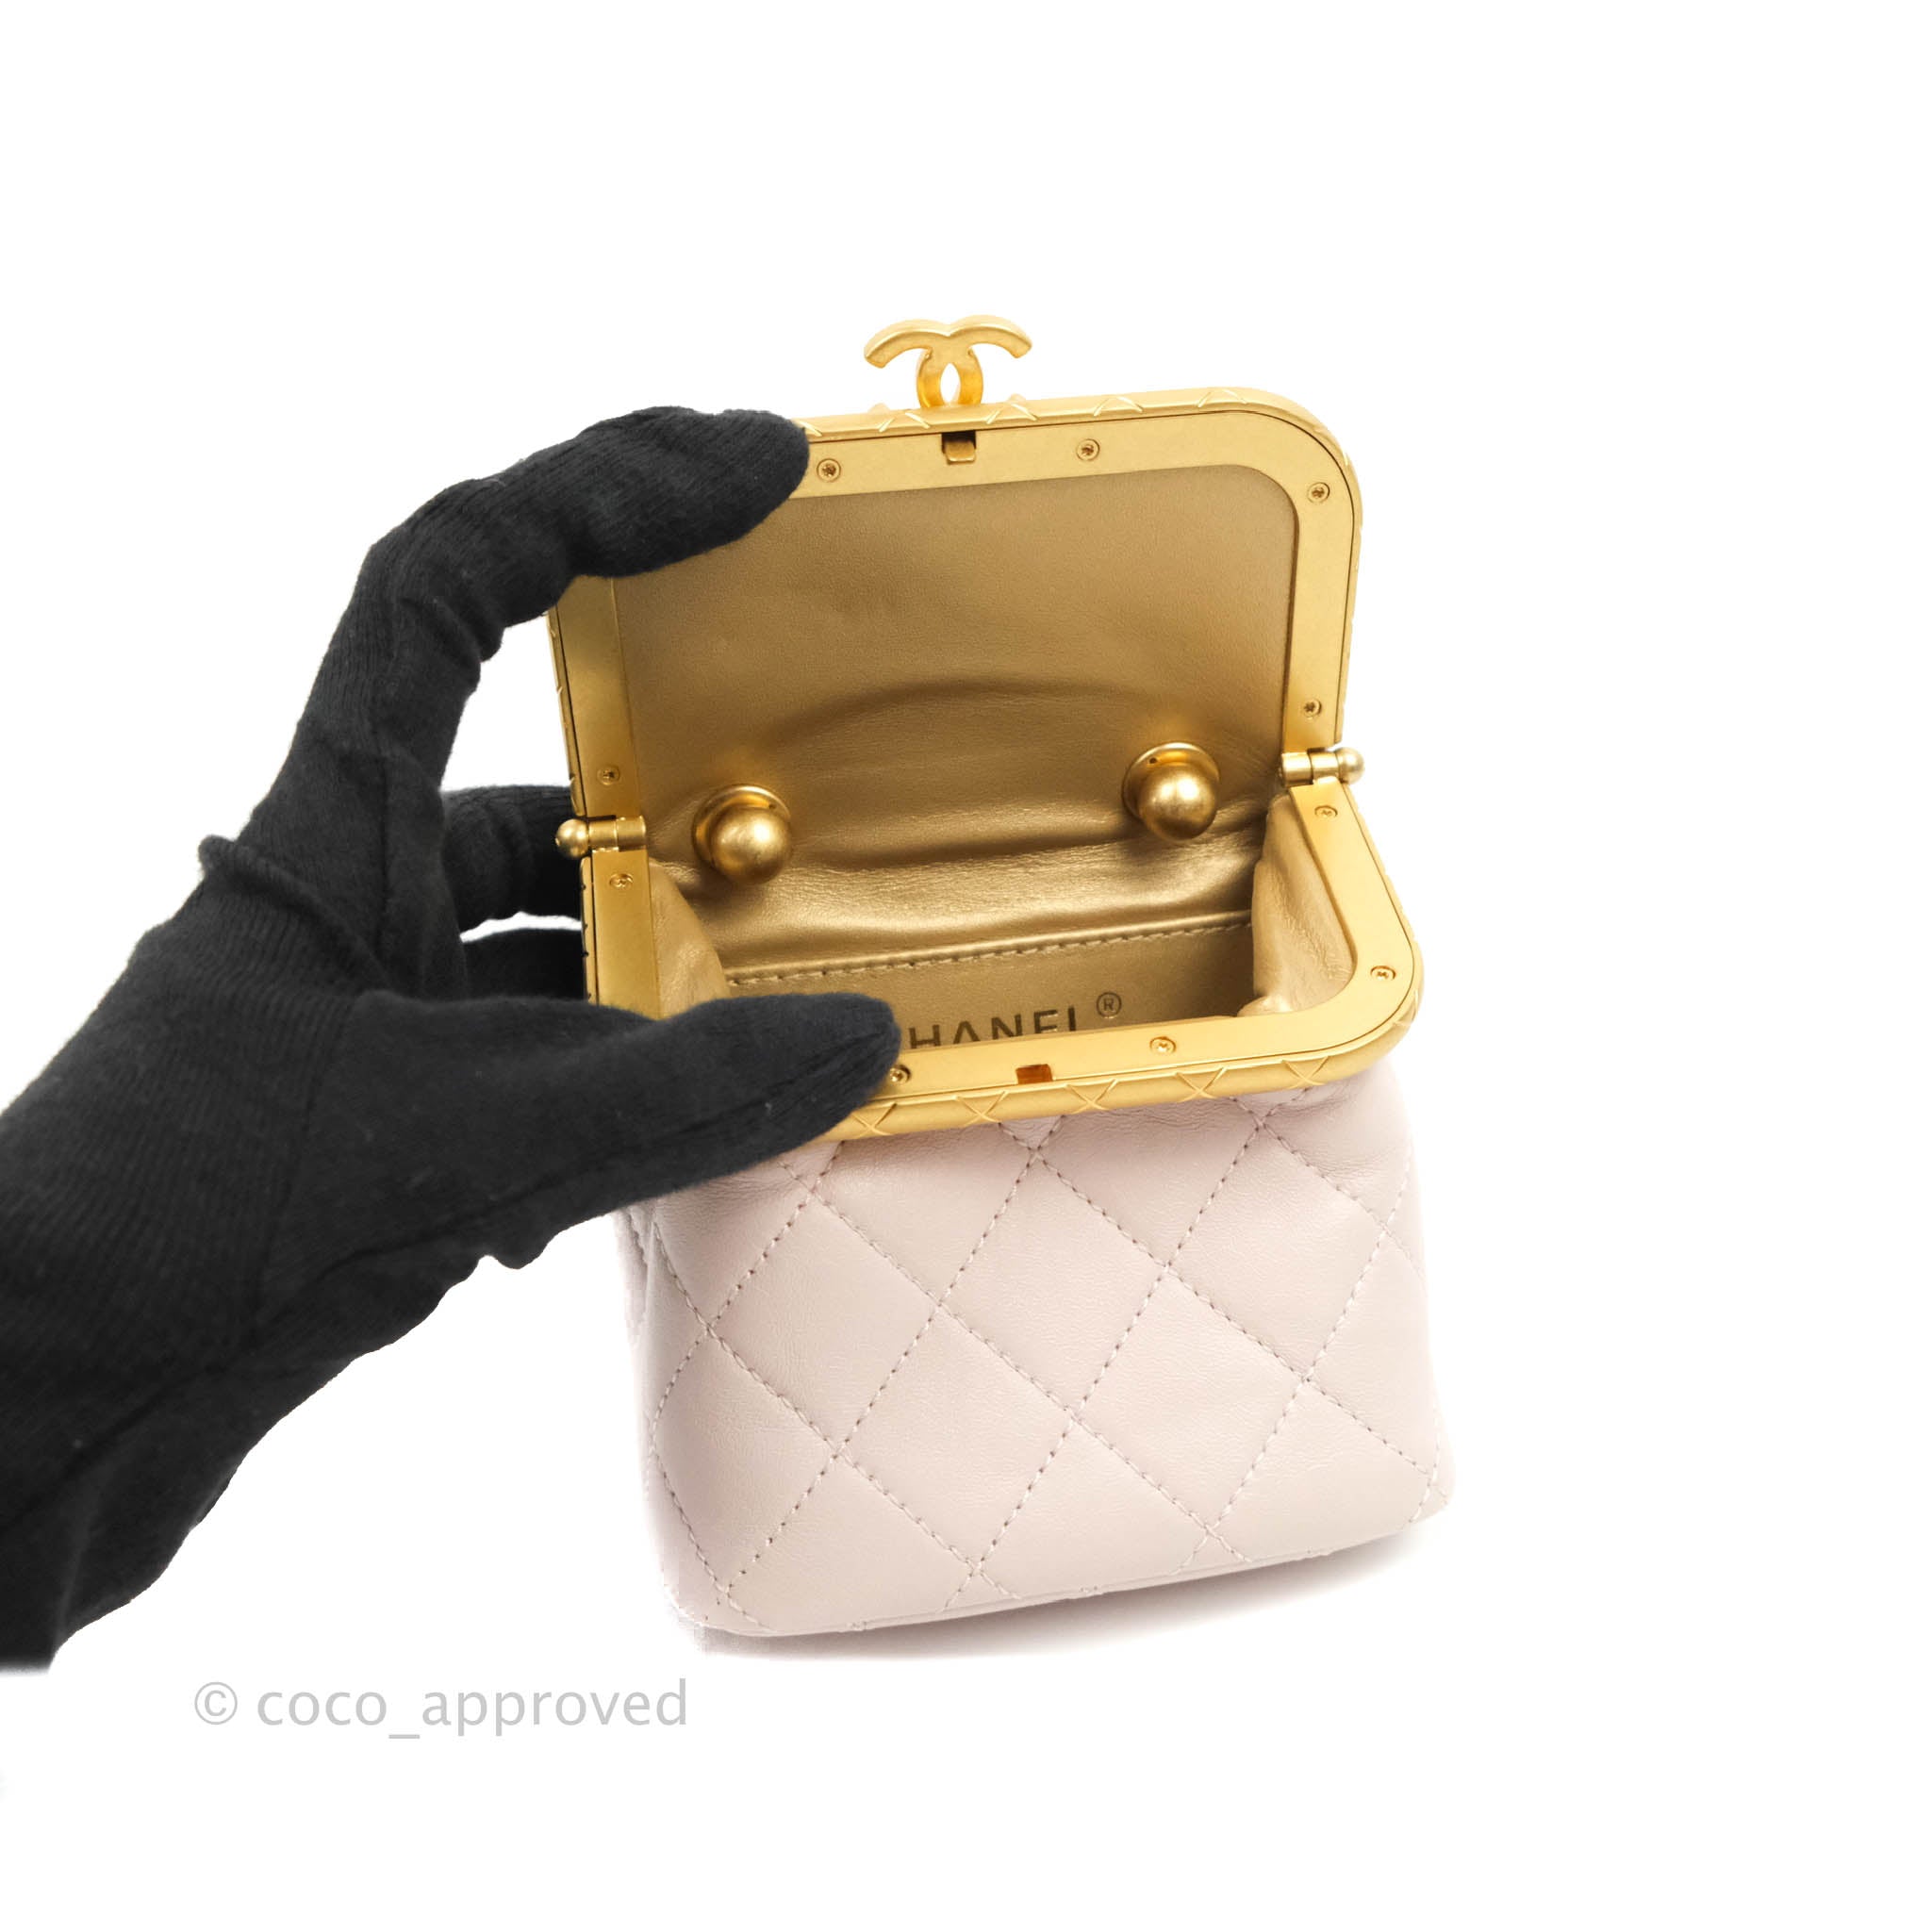 Chanel Black Small Kiss-Lock Lambskin Bag Gold-Tone Metal Leather